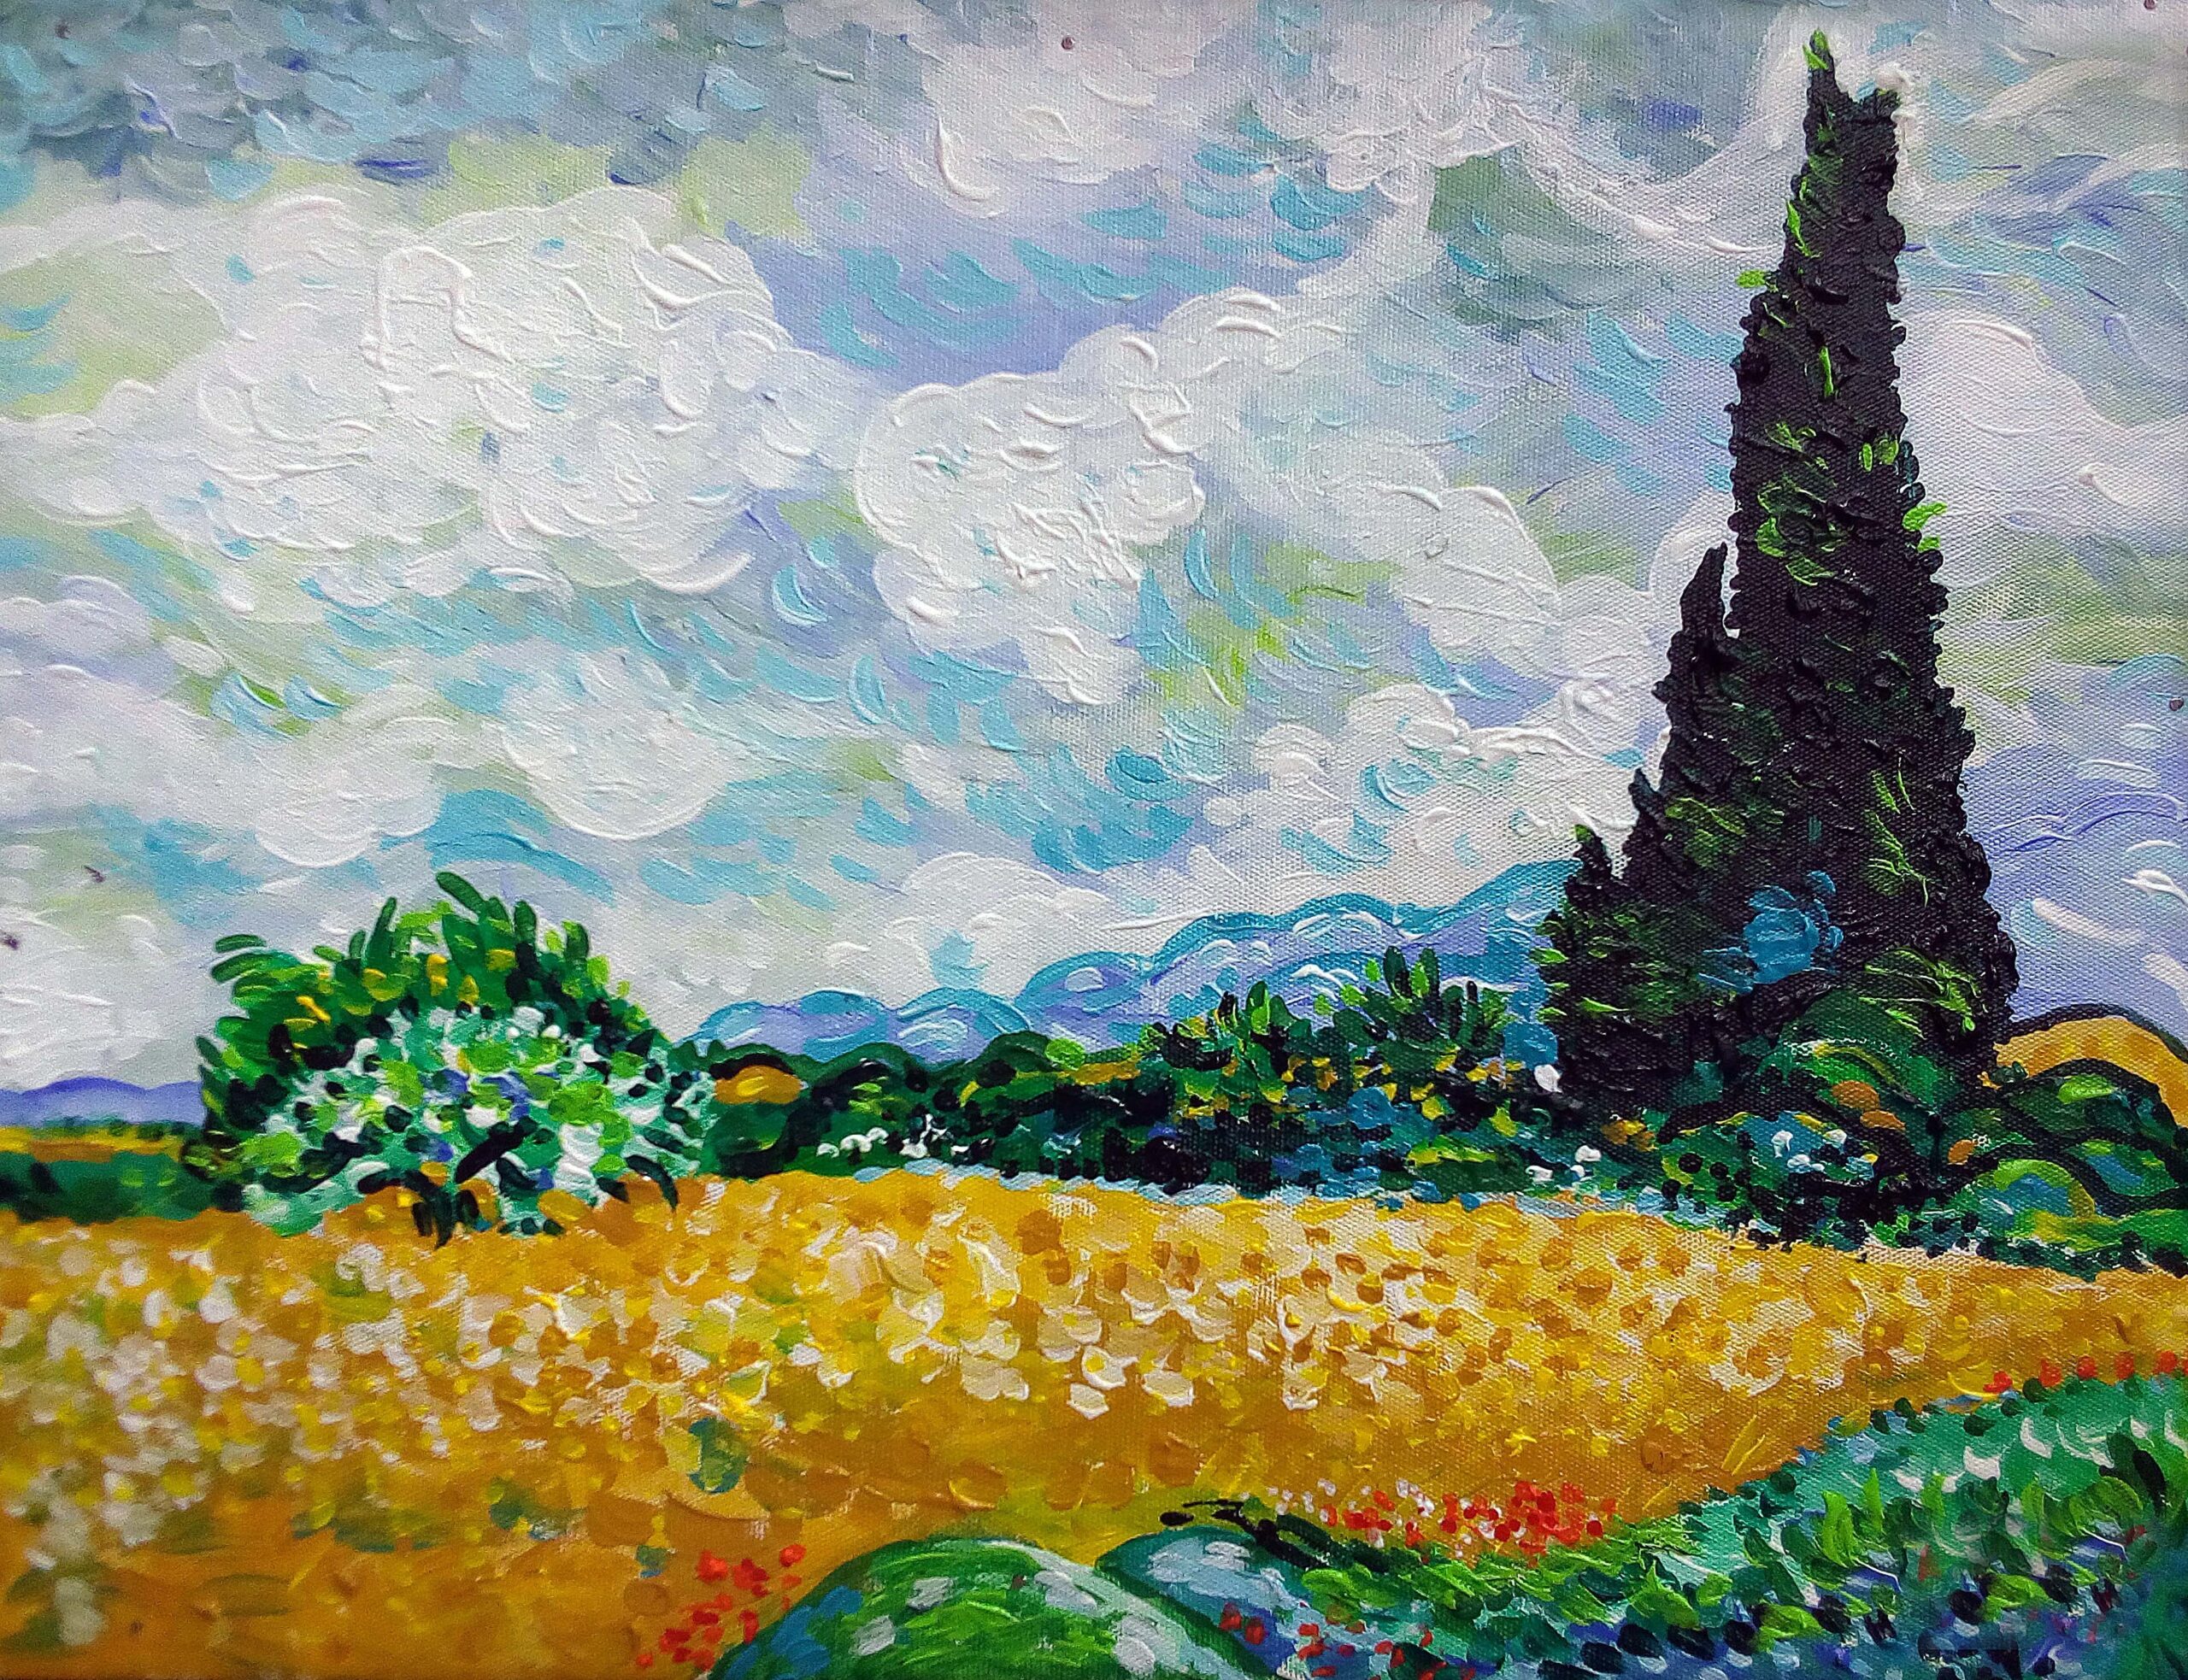 Van Gogh Wheat Field Painting
